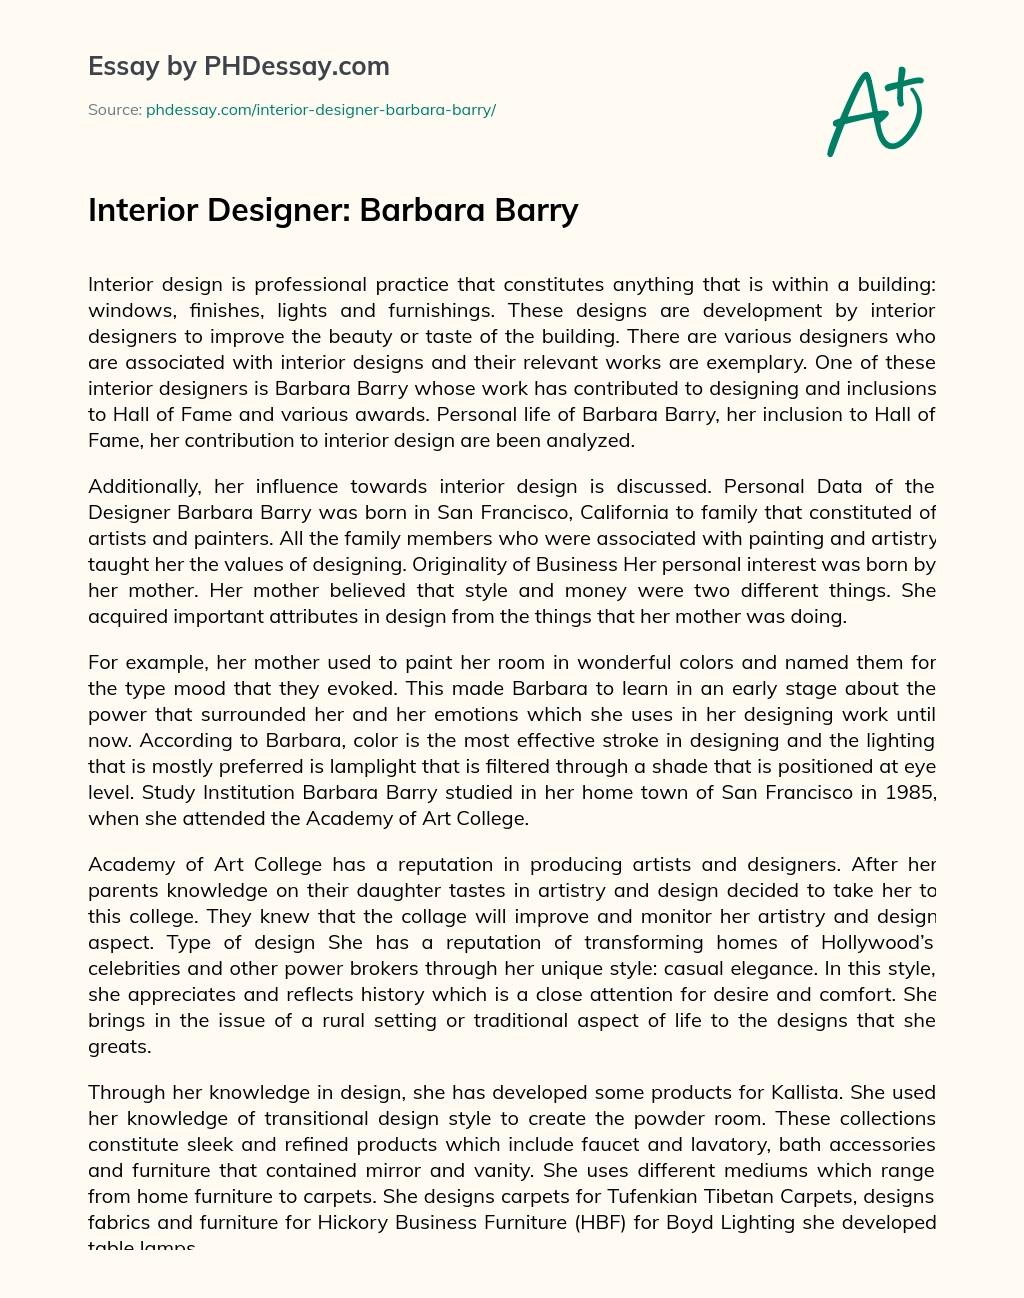 Interior Designer: Barbara Barry essay